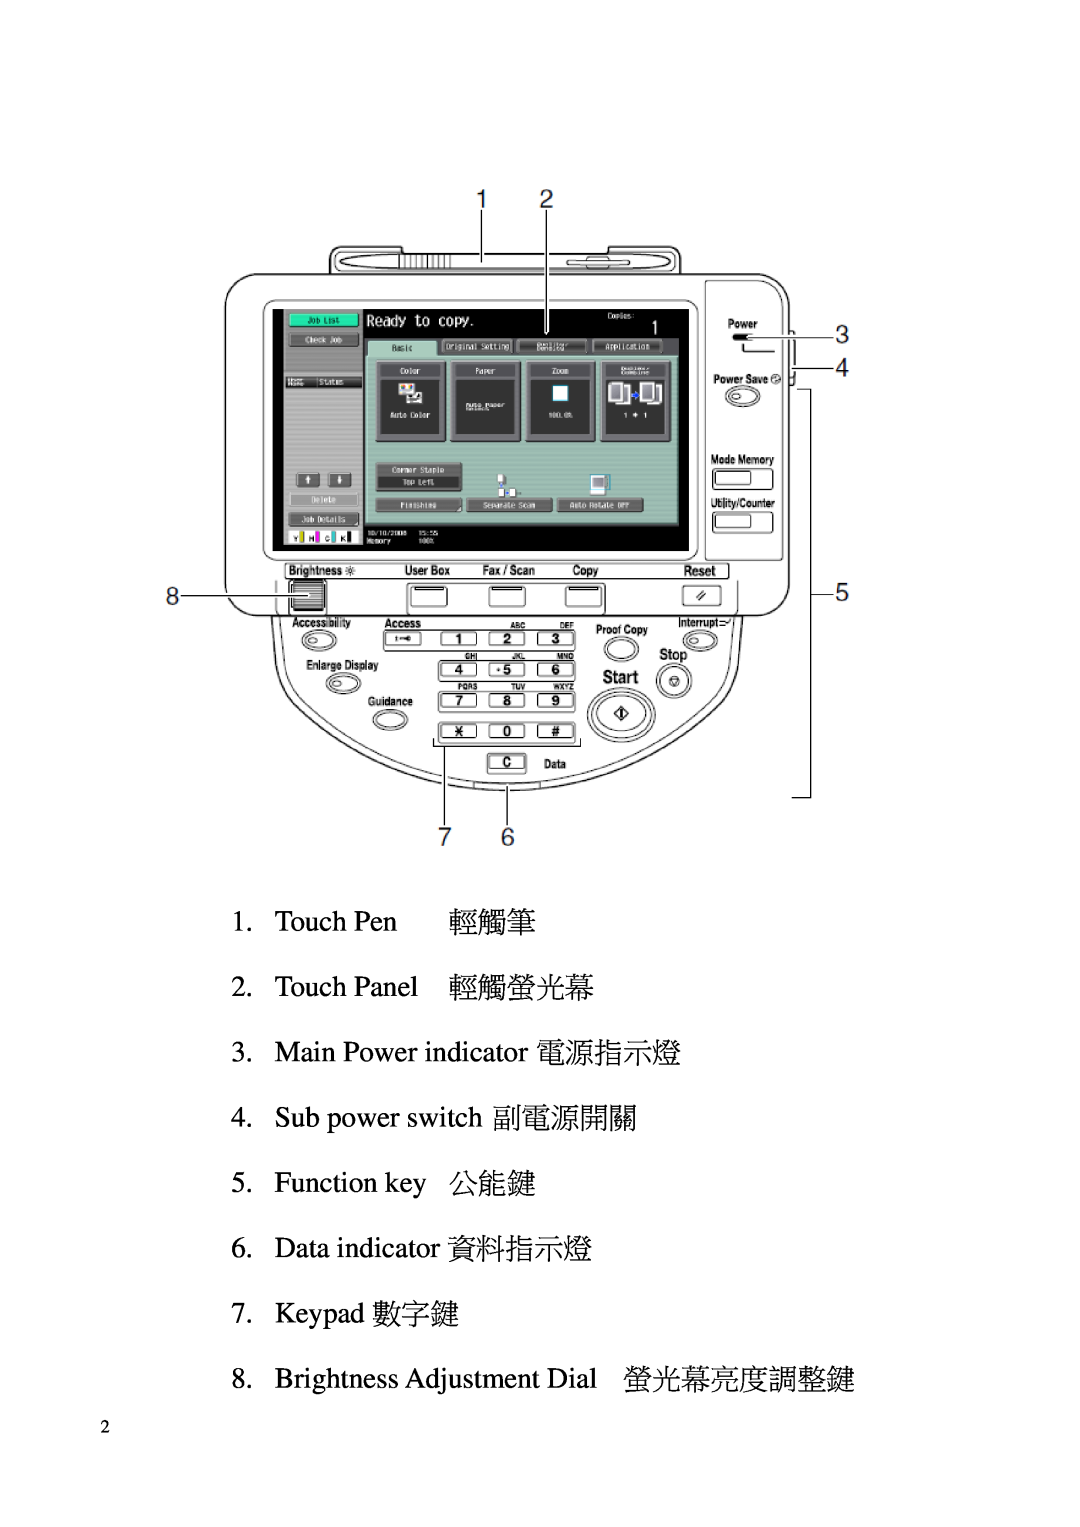 Konica Minolta C552, C452 manual Touch Pen 輕觸筆 2. Touch Panel 輕觸螢光幕 3. Main Power indicator 電源指示燈 